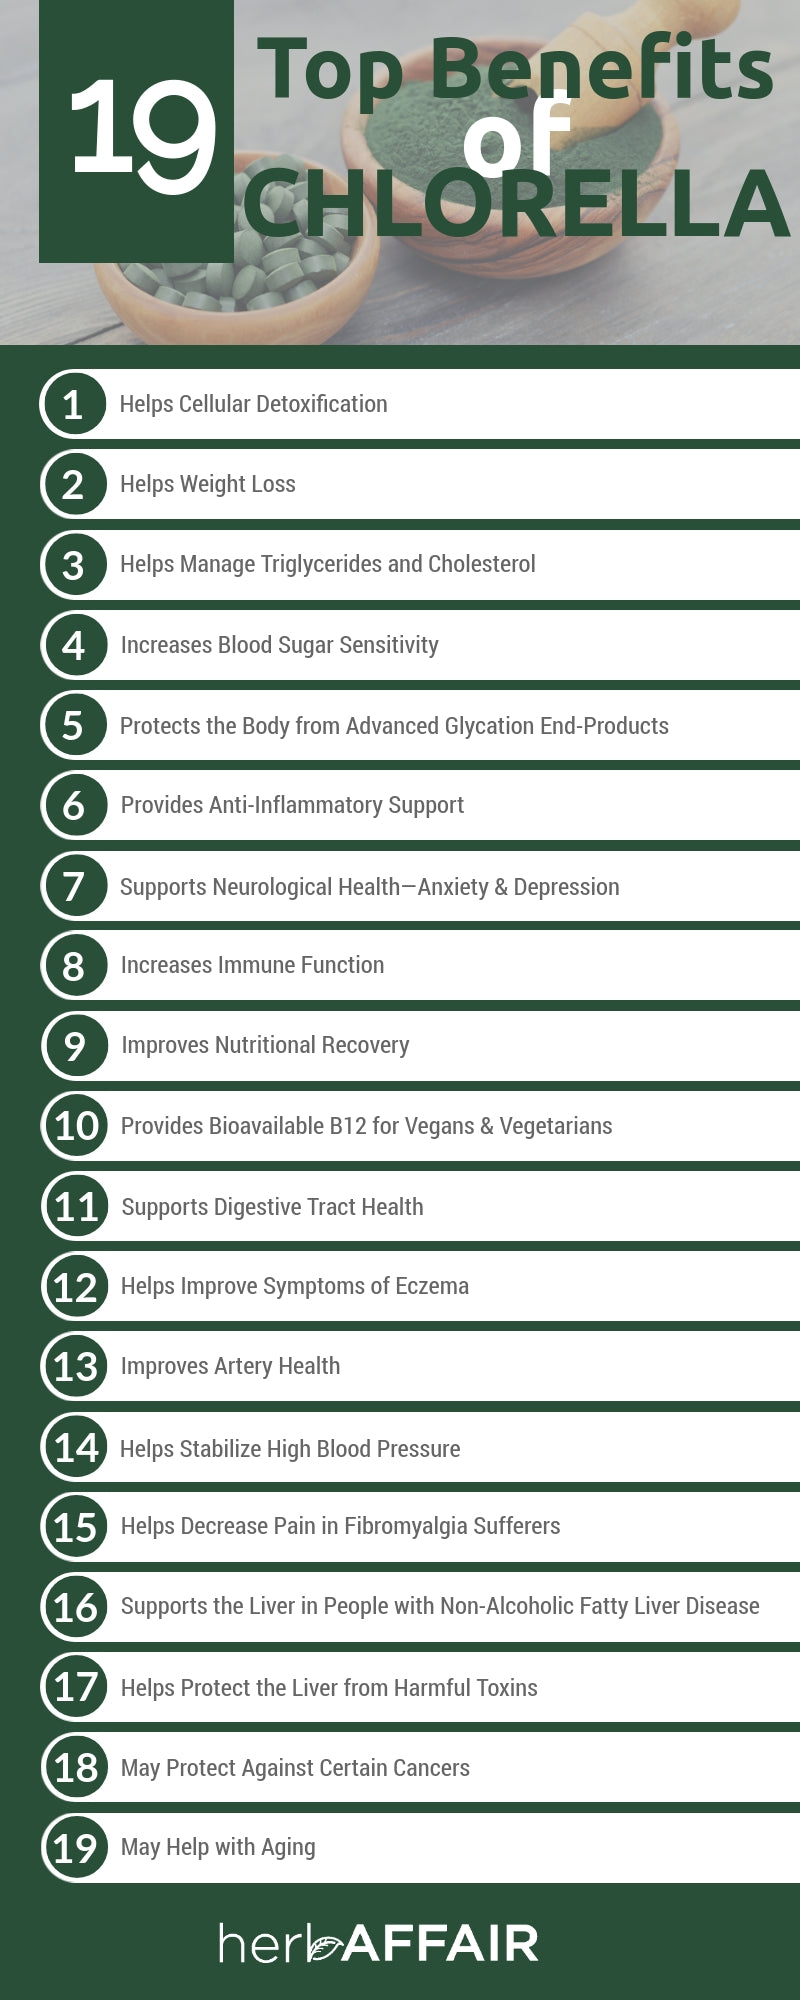 19 Top Health Benefits of Chlorella